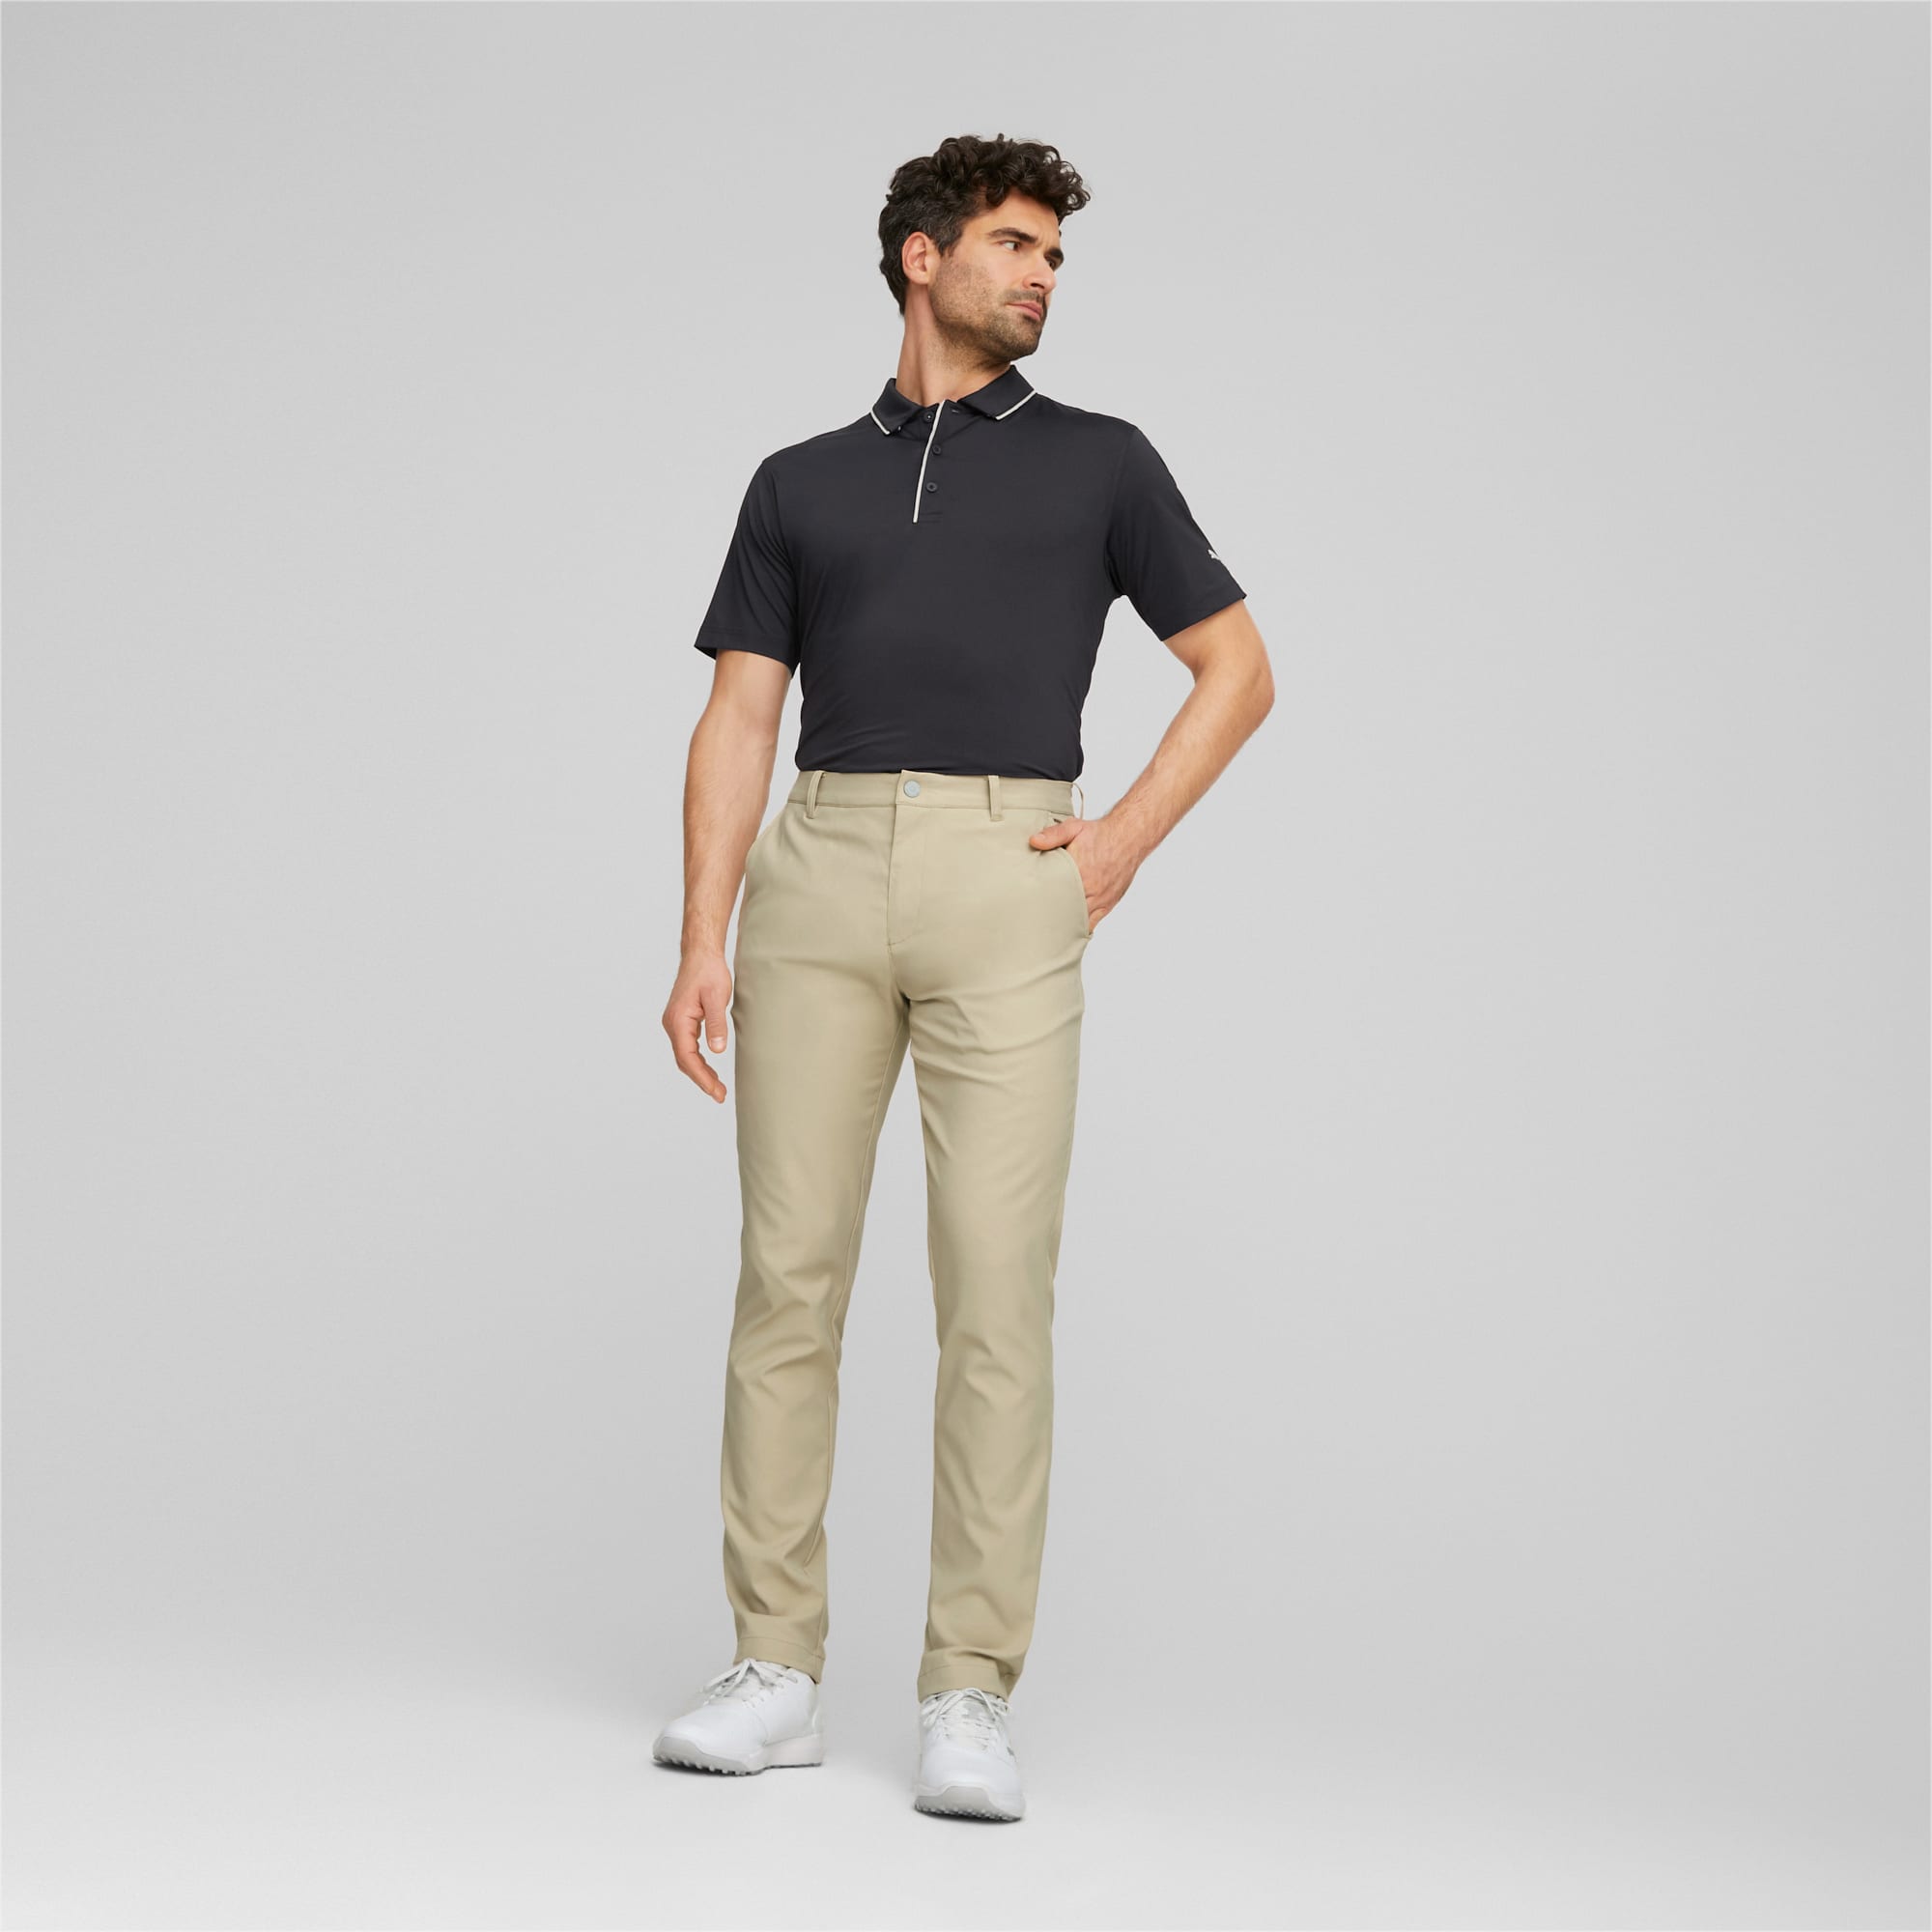 PUMA Dealer Tailored Golf Pants Men, Alabaster, Size 36/30, Clothing